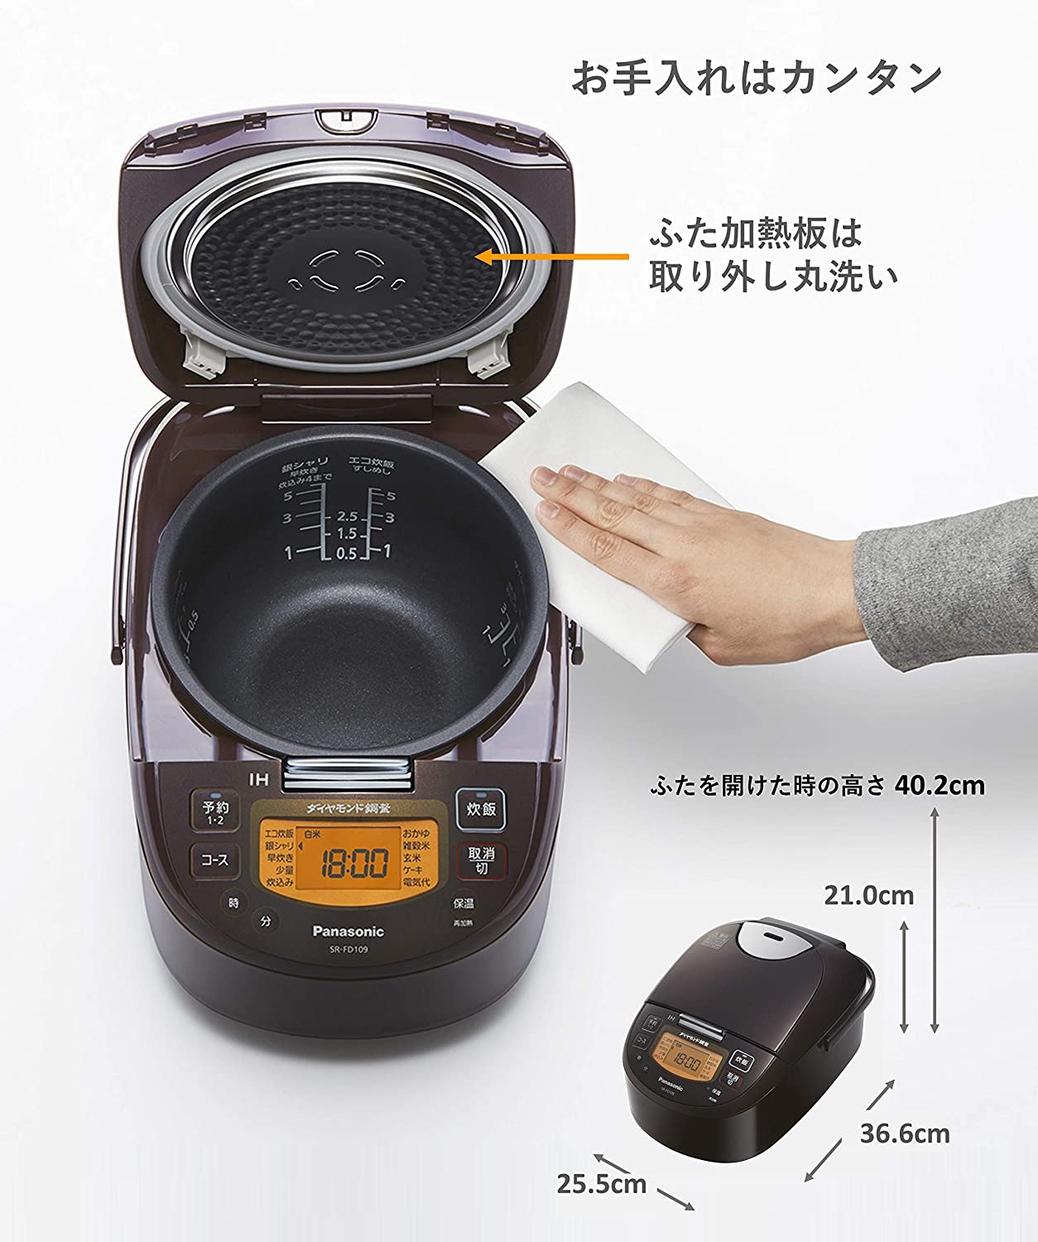 Panasonic(パナソニック) 炊飯器 5.5合 IH式  SR-FD109-Tの商品画像5 